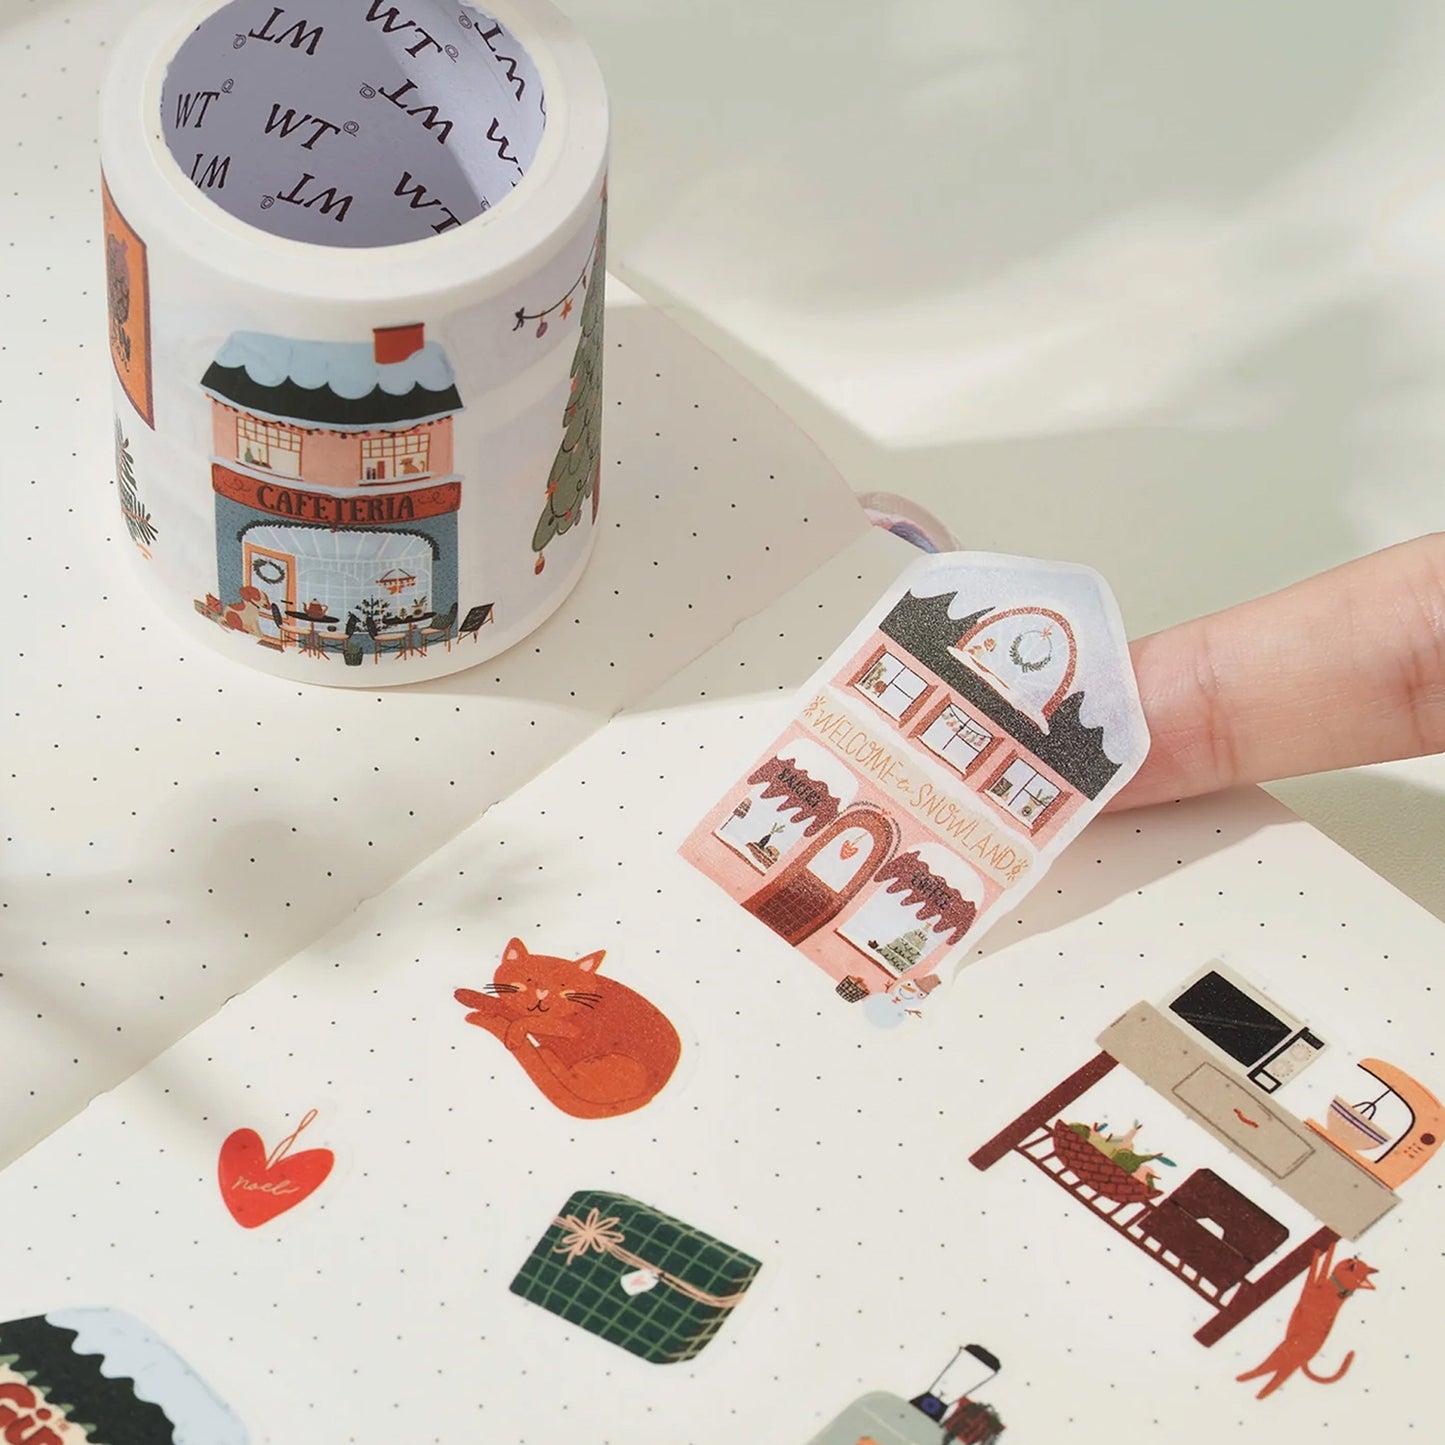 The Washi Tape Shop - Washi Tape Sticker Set - Home Sweet Home